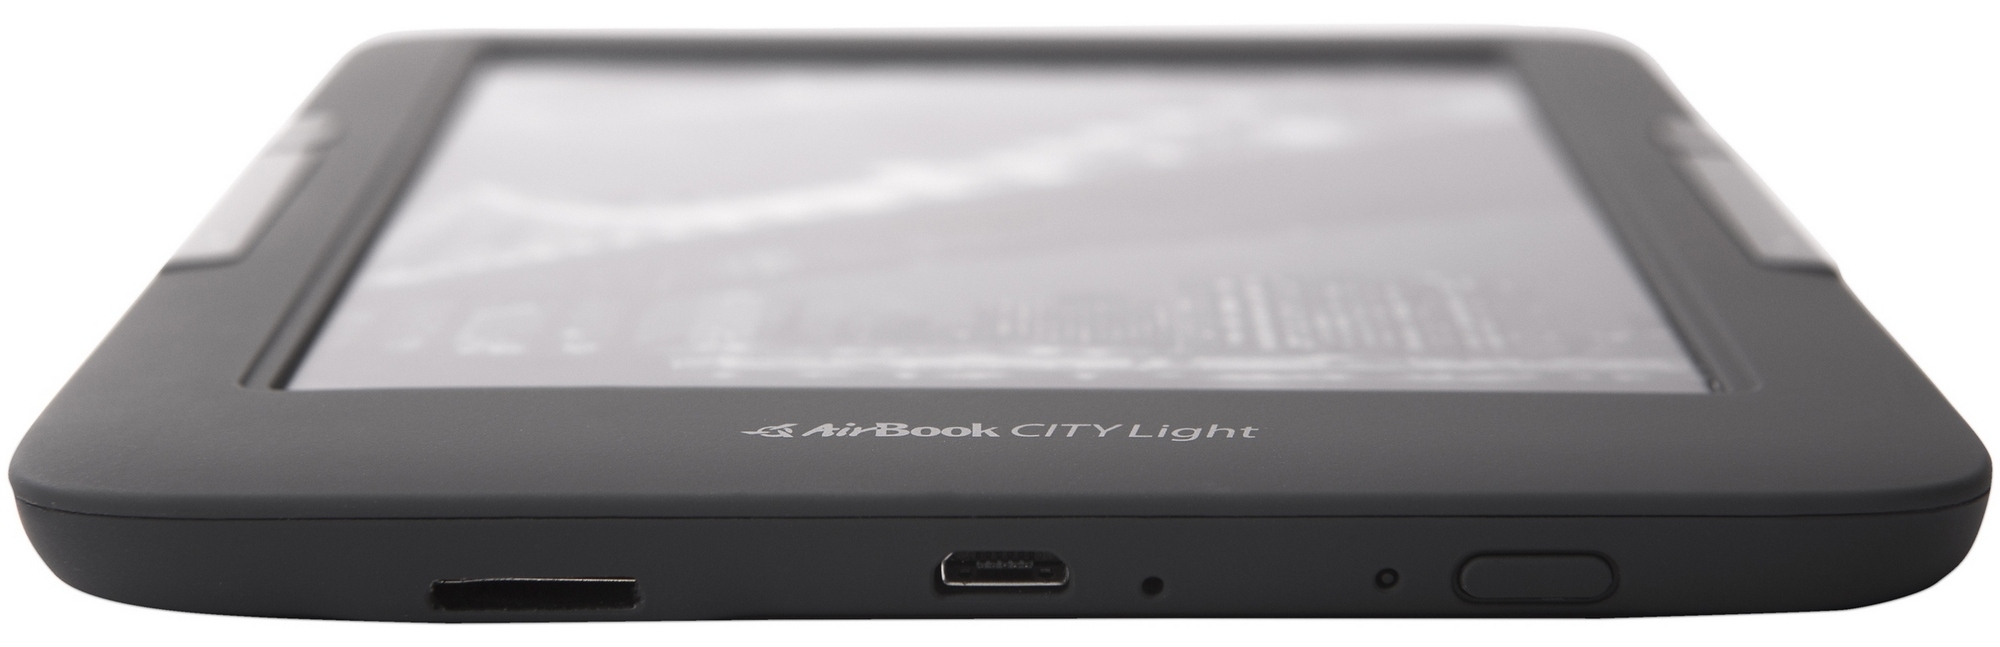 Електронна книга AirBook City Light Touch - зображення 3